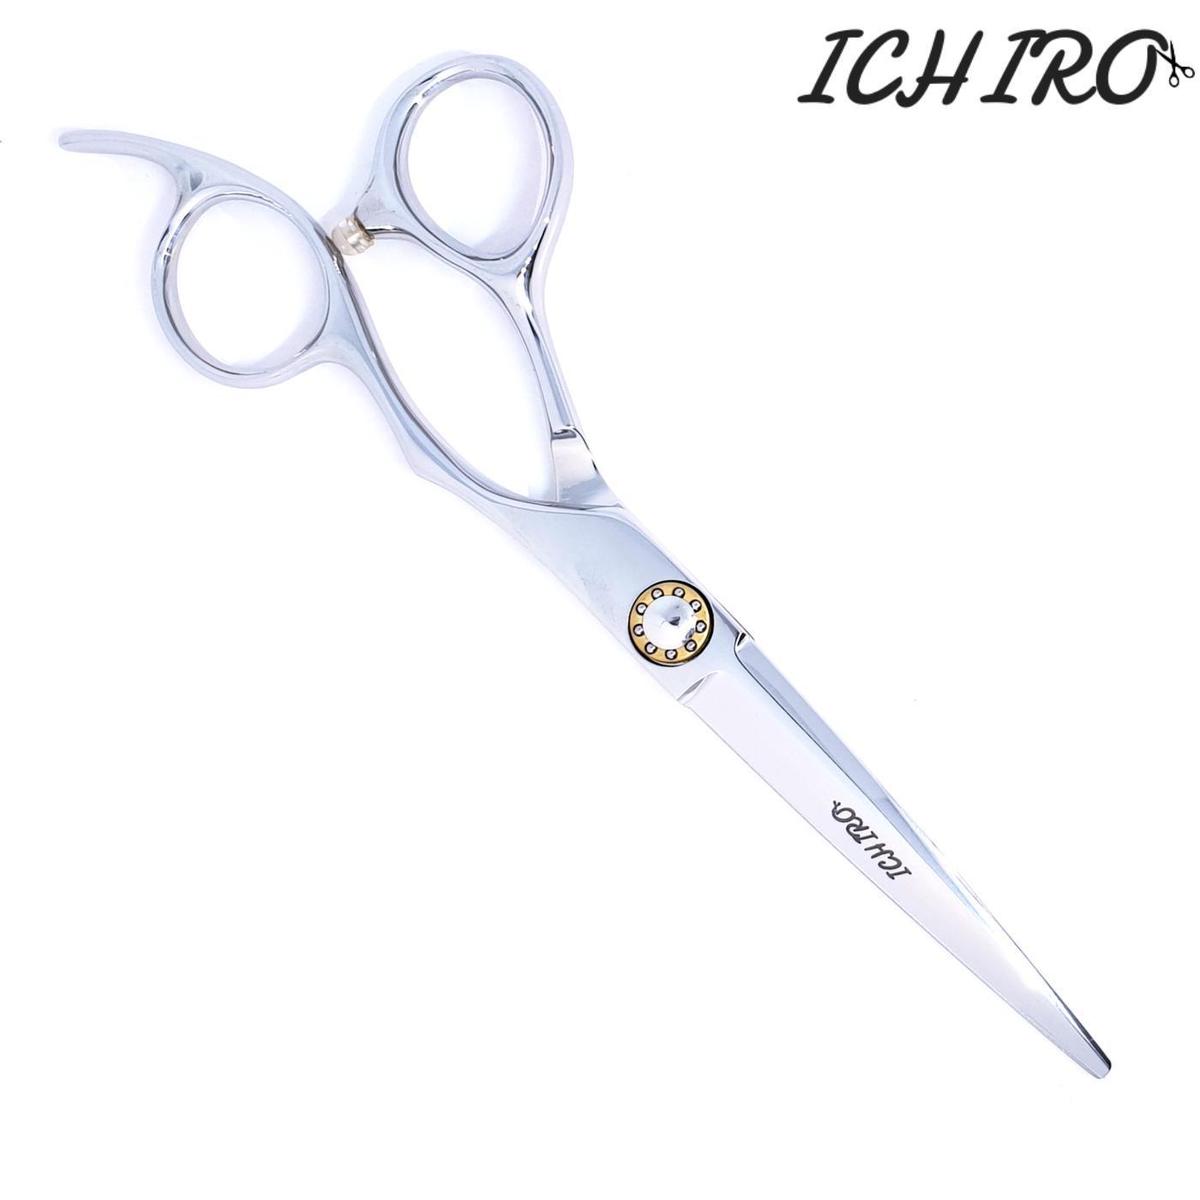 The Ichiro Offset Apprentice Hair Cutting Scissor